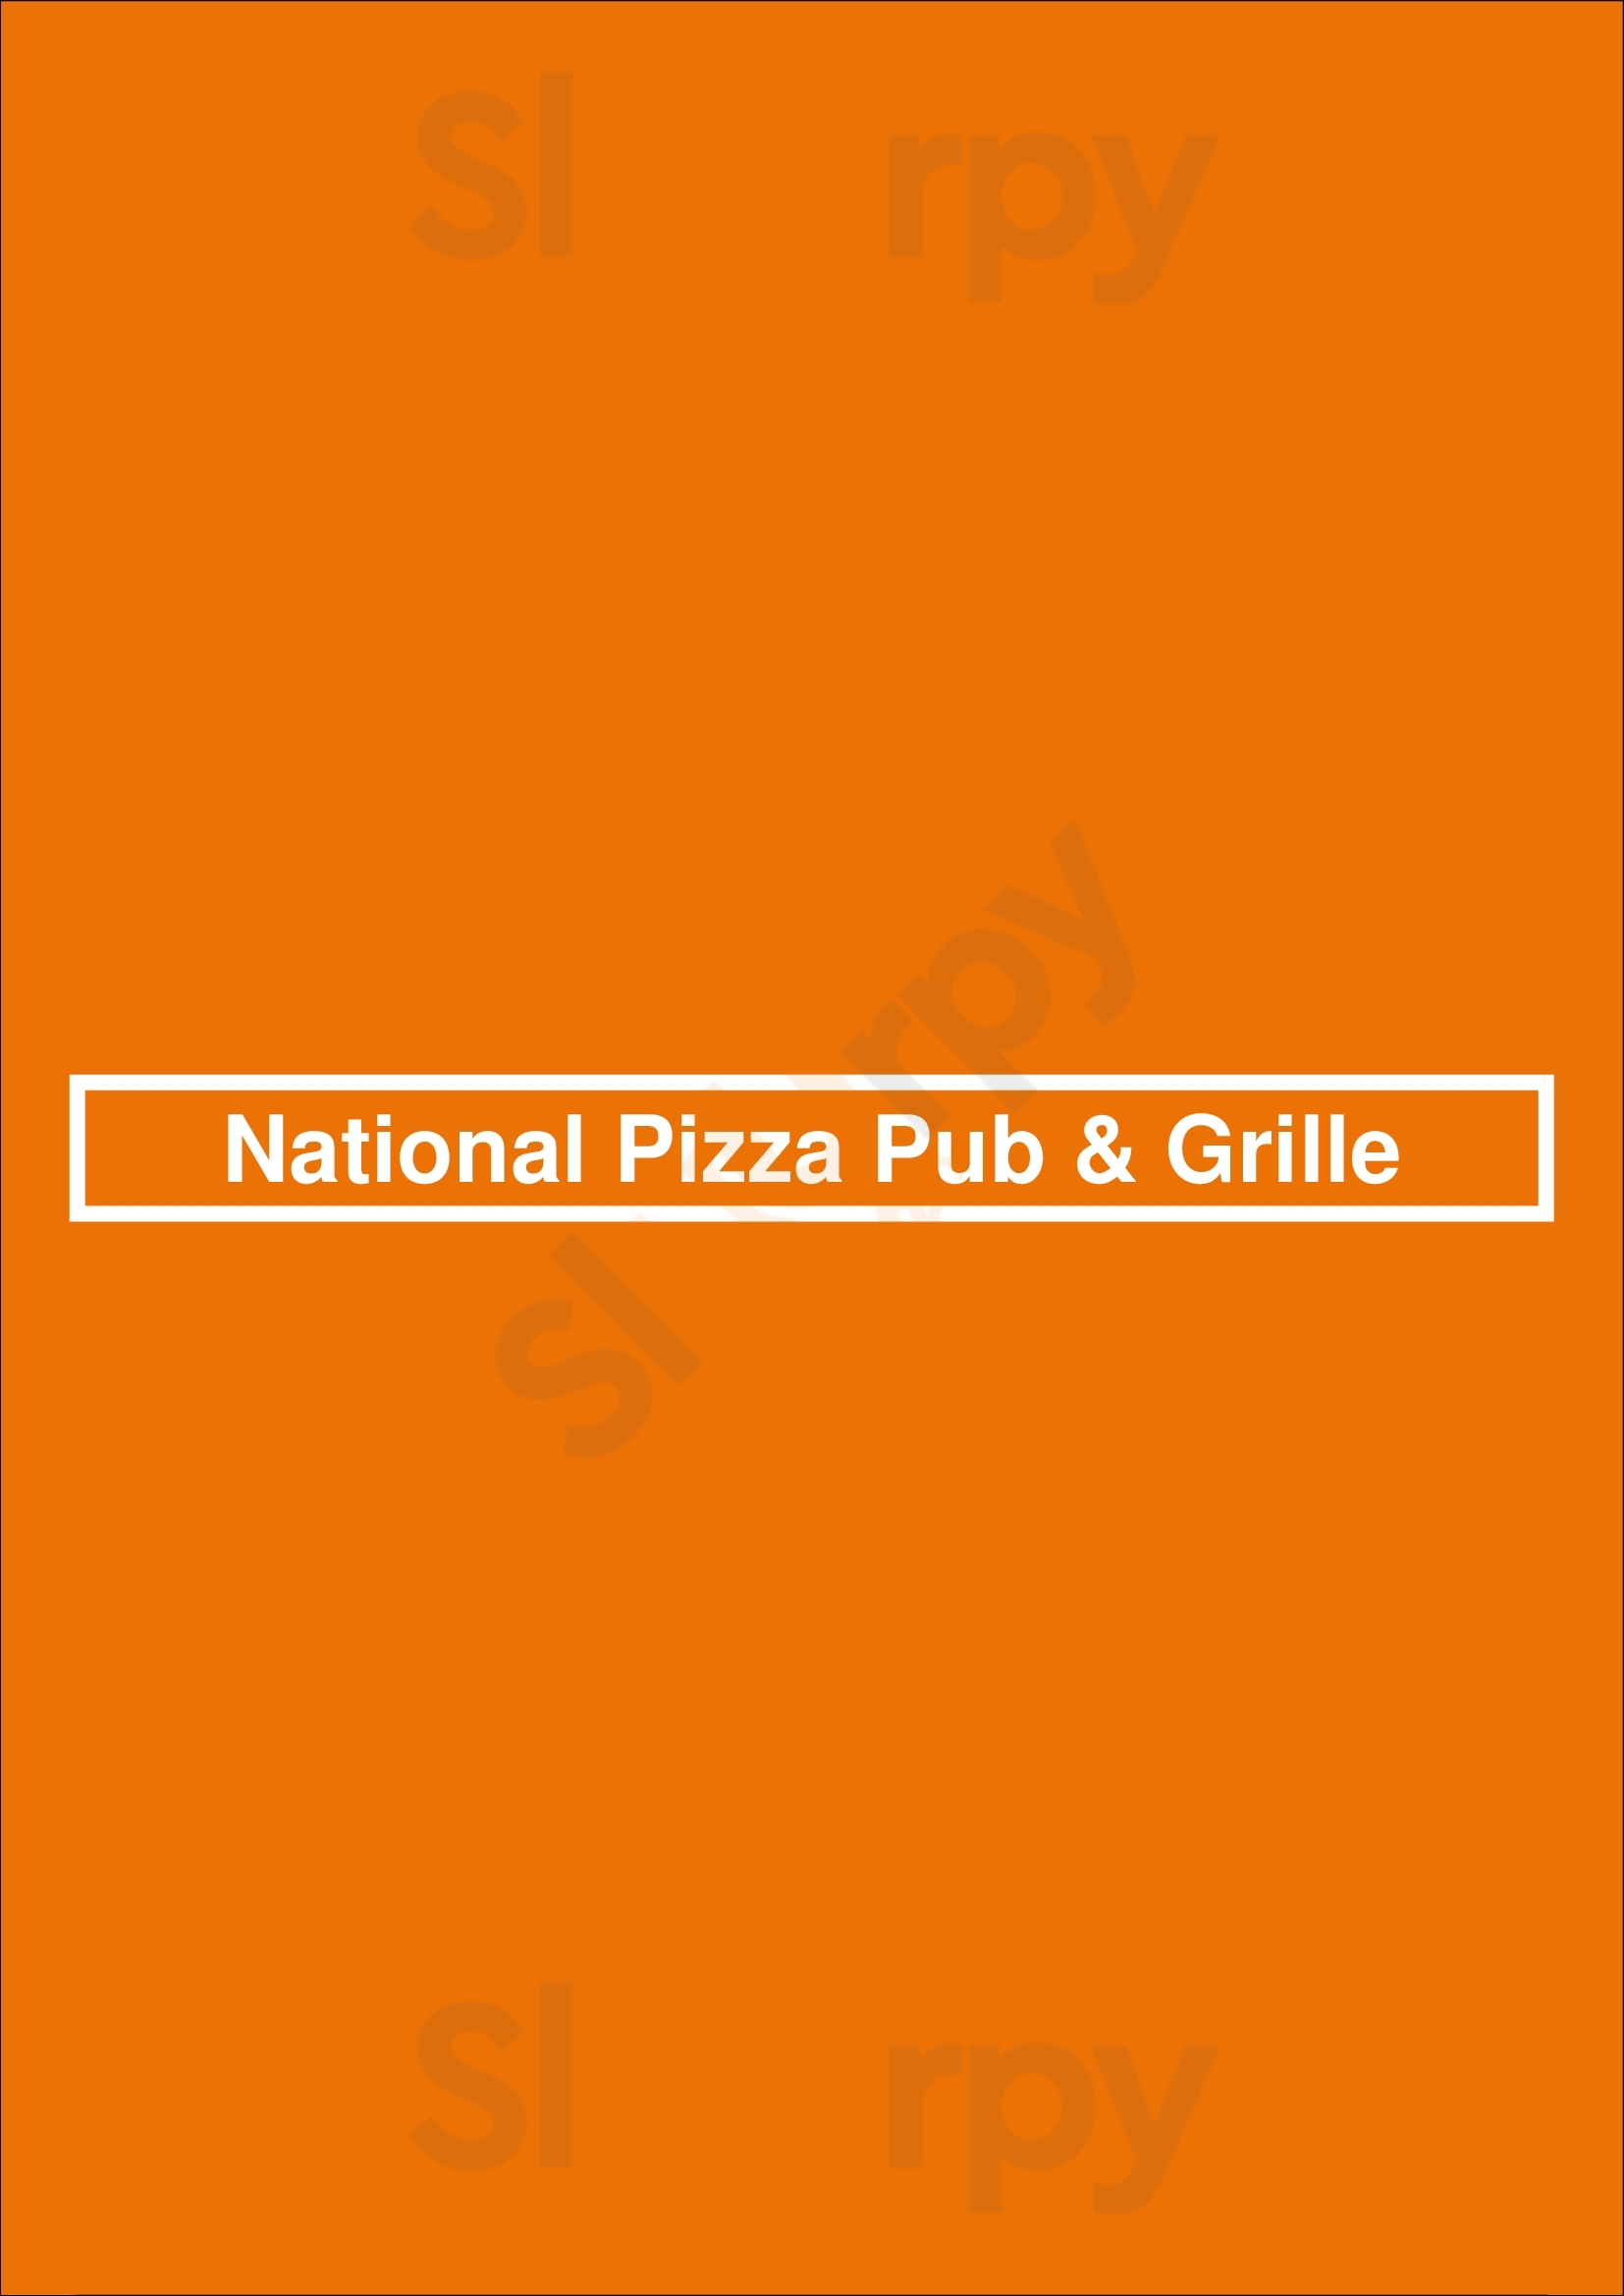 National Pizza Pub & Grille Milwaukee Menu - 1